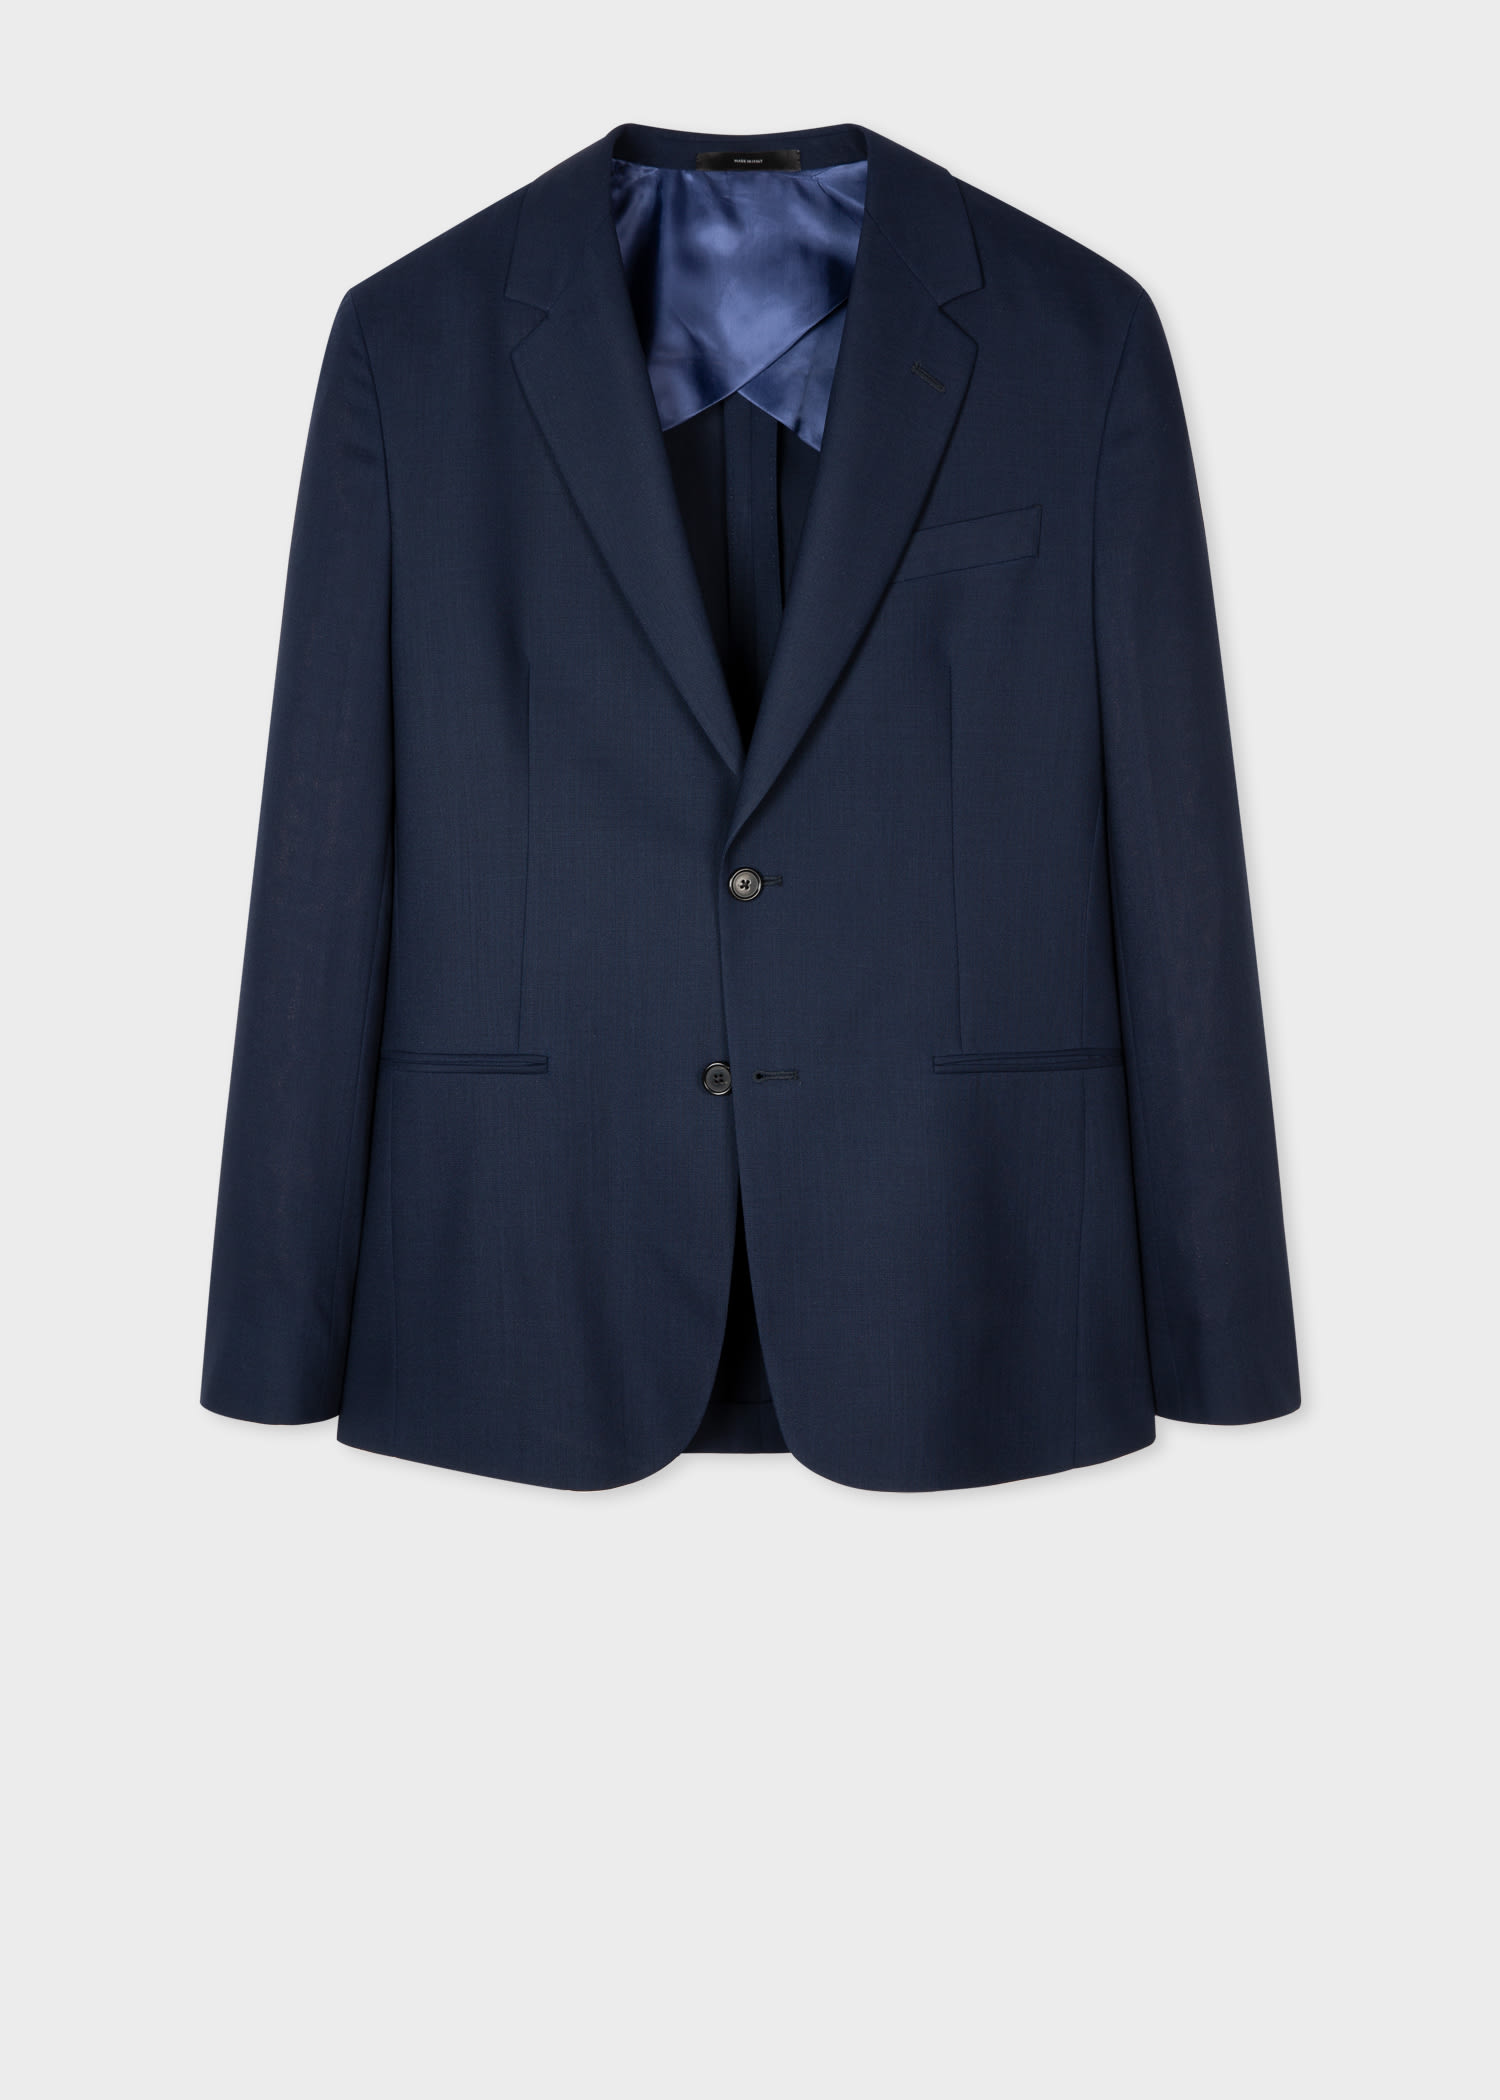 Men's Designer Blazers | Wool, Cotton & Linen Blazer Jackets - Paul Smith